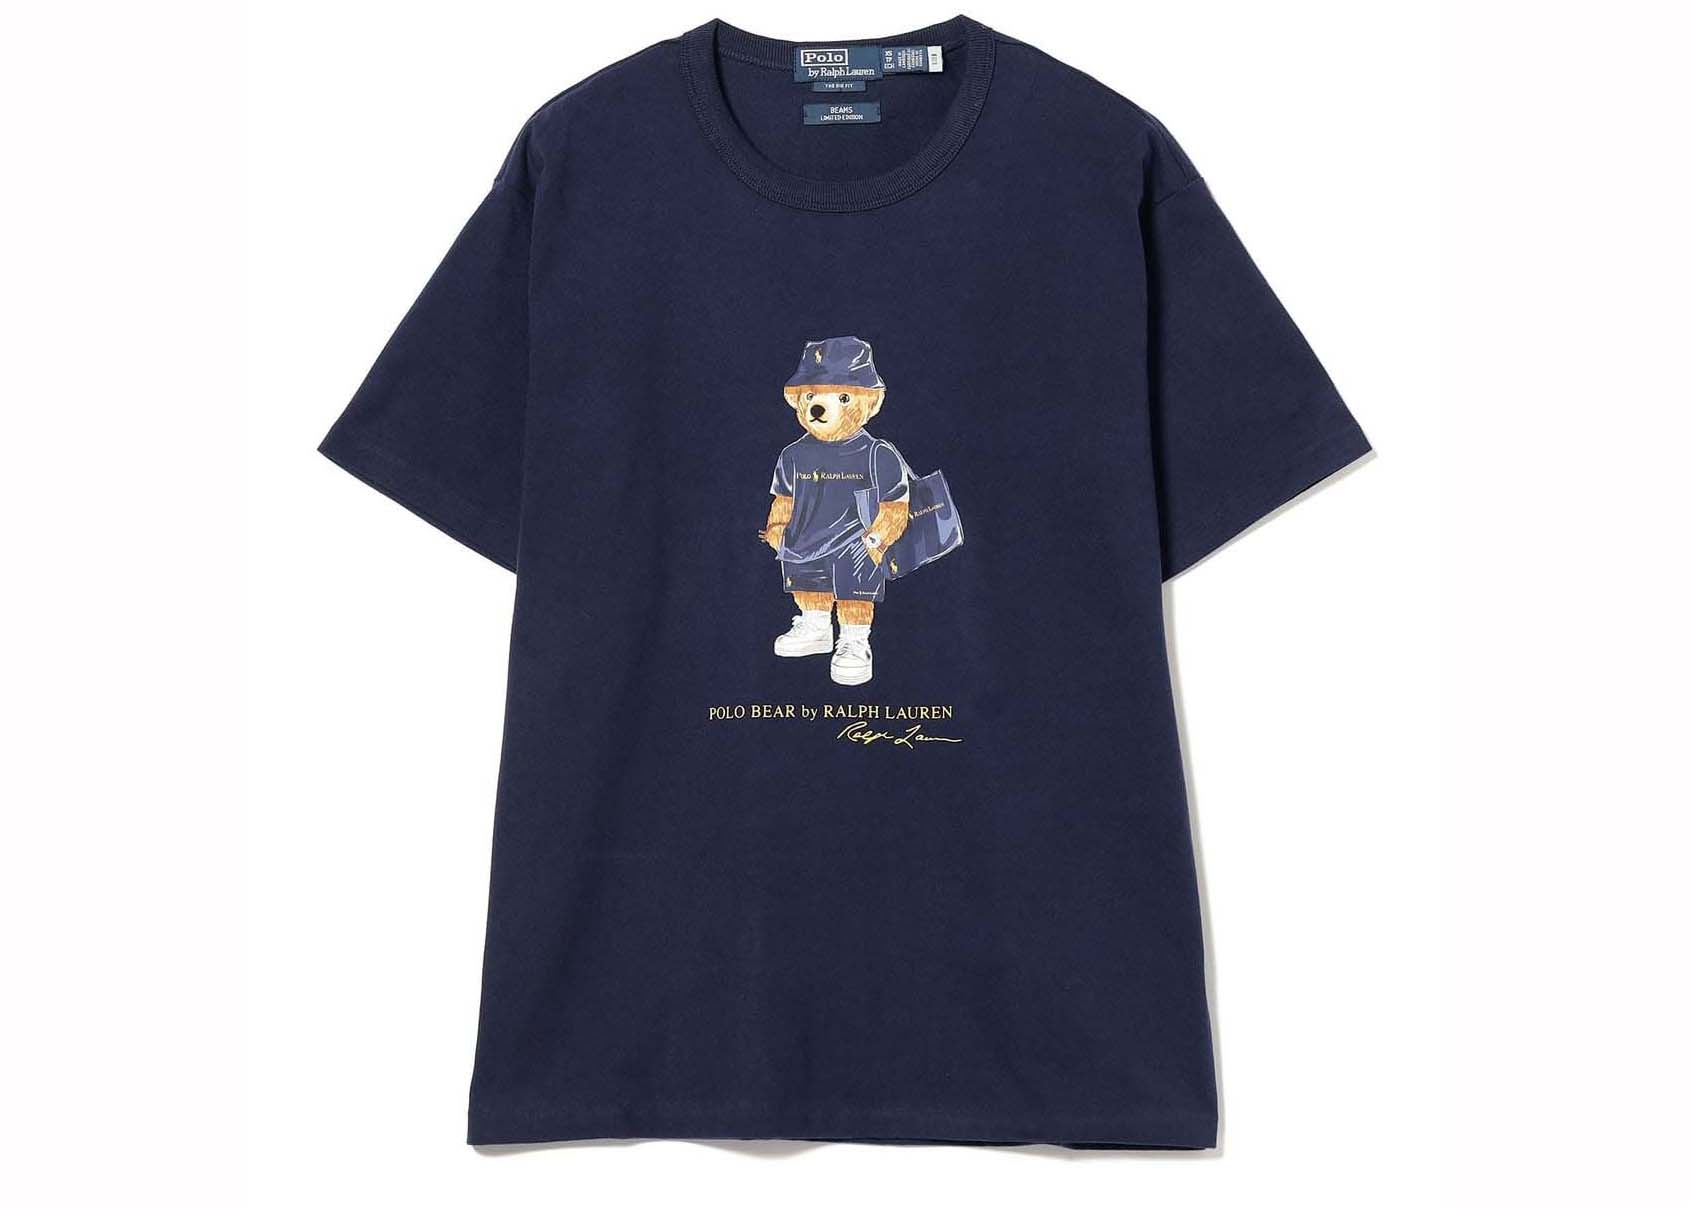 Polo Ralph Lauren for Beams Polo Bear (Womens) T-Shirt Navy